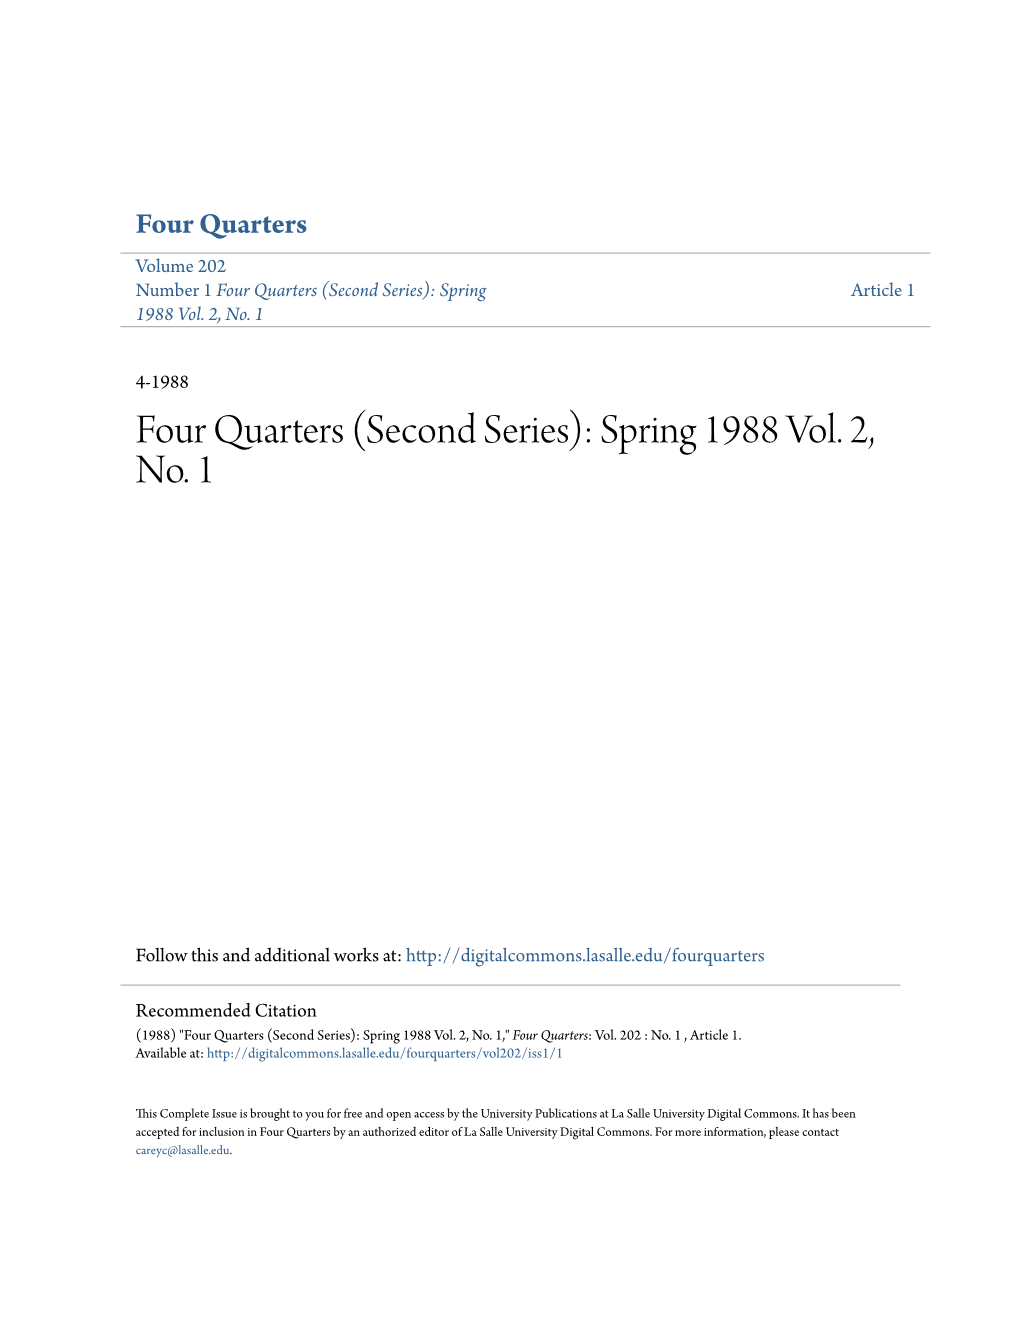 Four Quarters Volume 202 Number 1 Four Quarters (Second Series): Spring Article 1 1988 Vol